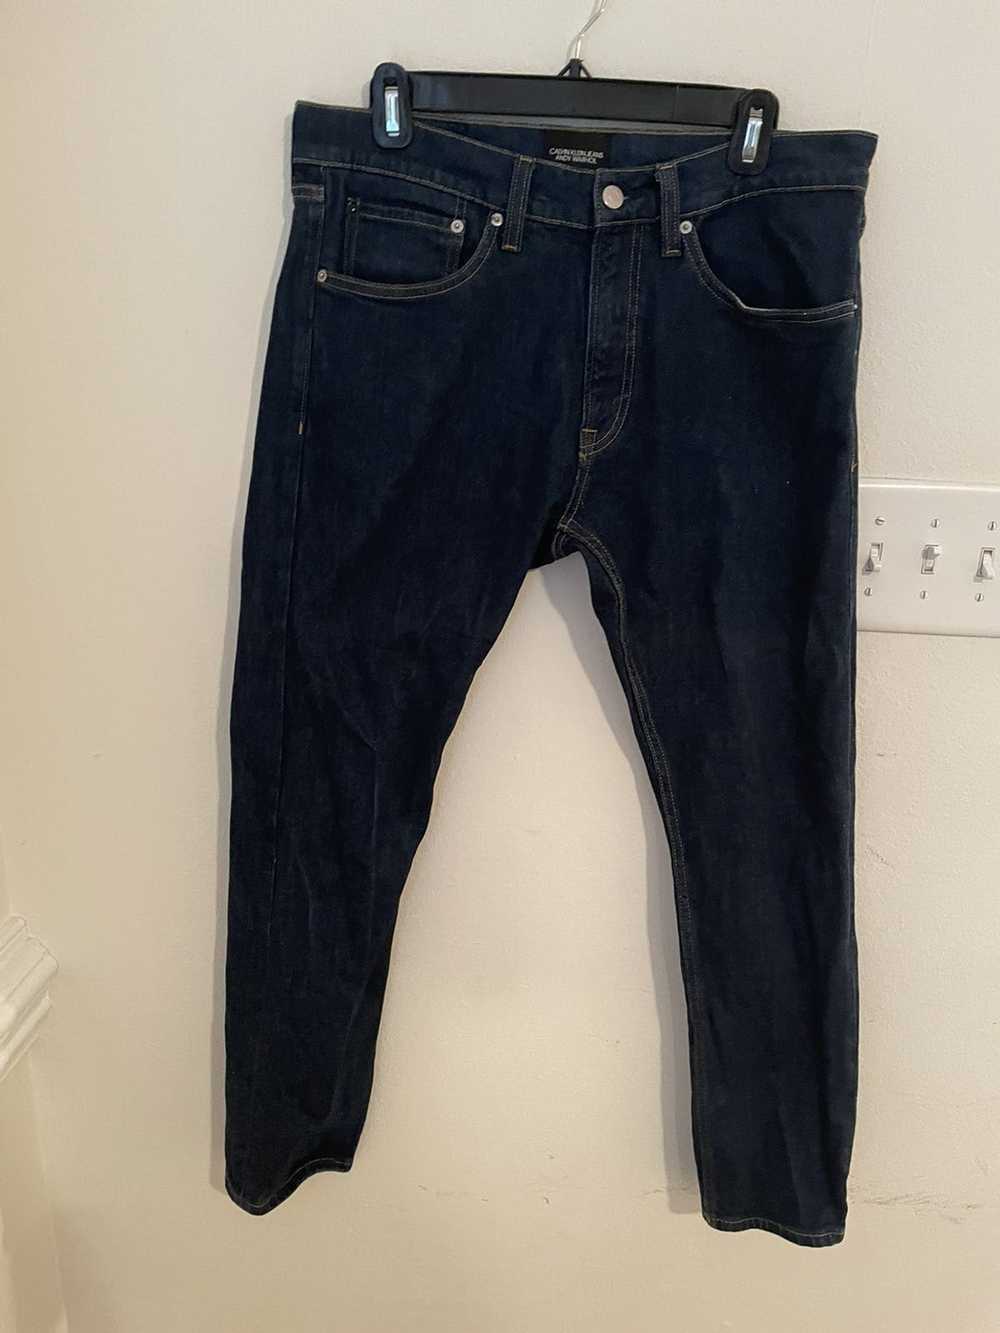 Andy Warhol × Calvin Klein Andy Warhol Denim jeans - image 6